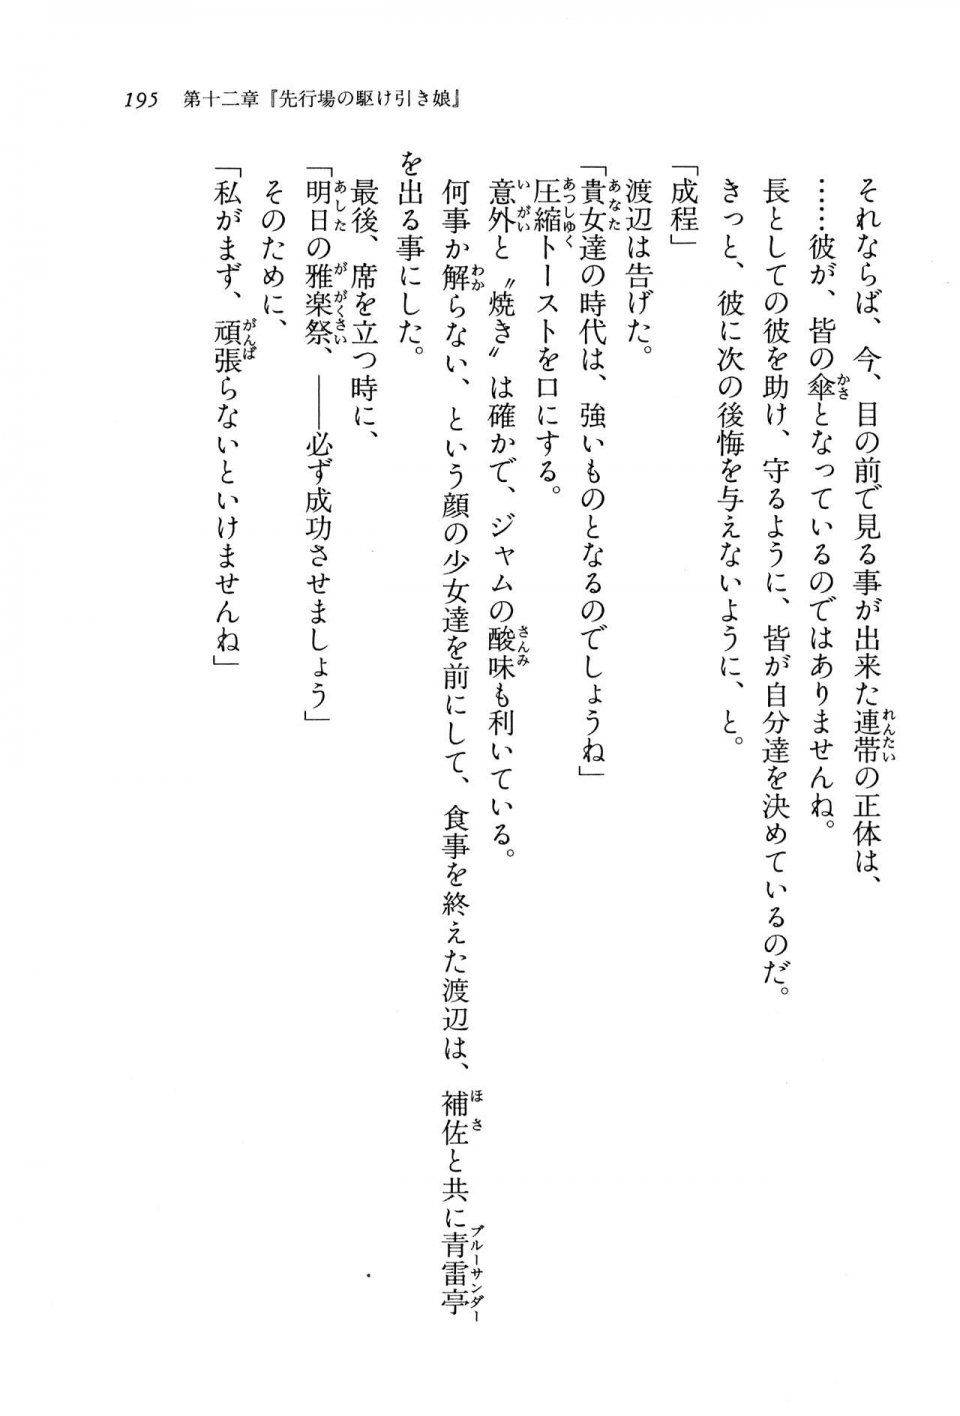 Kyoukai Senjou no Horizon BD Special Mininovel Vol 8(4B) - Photo #199